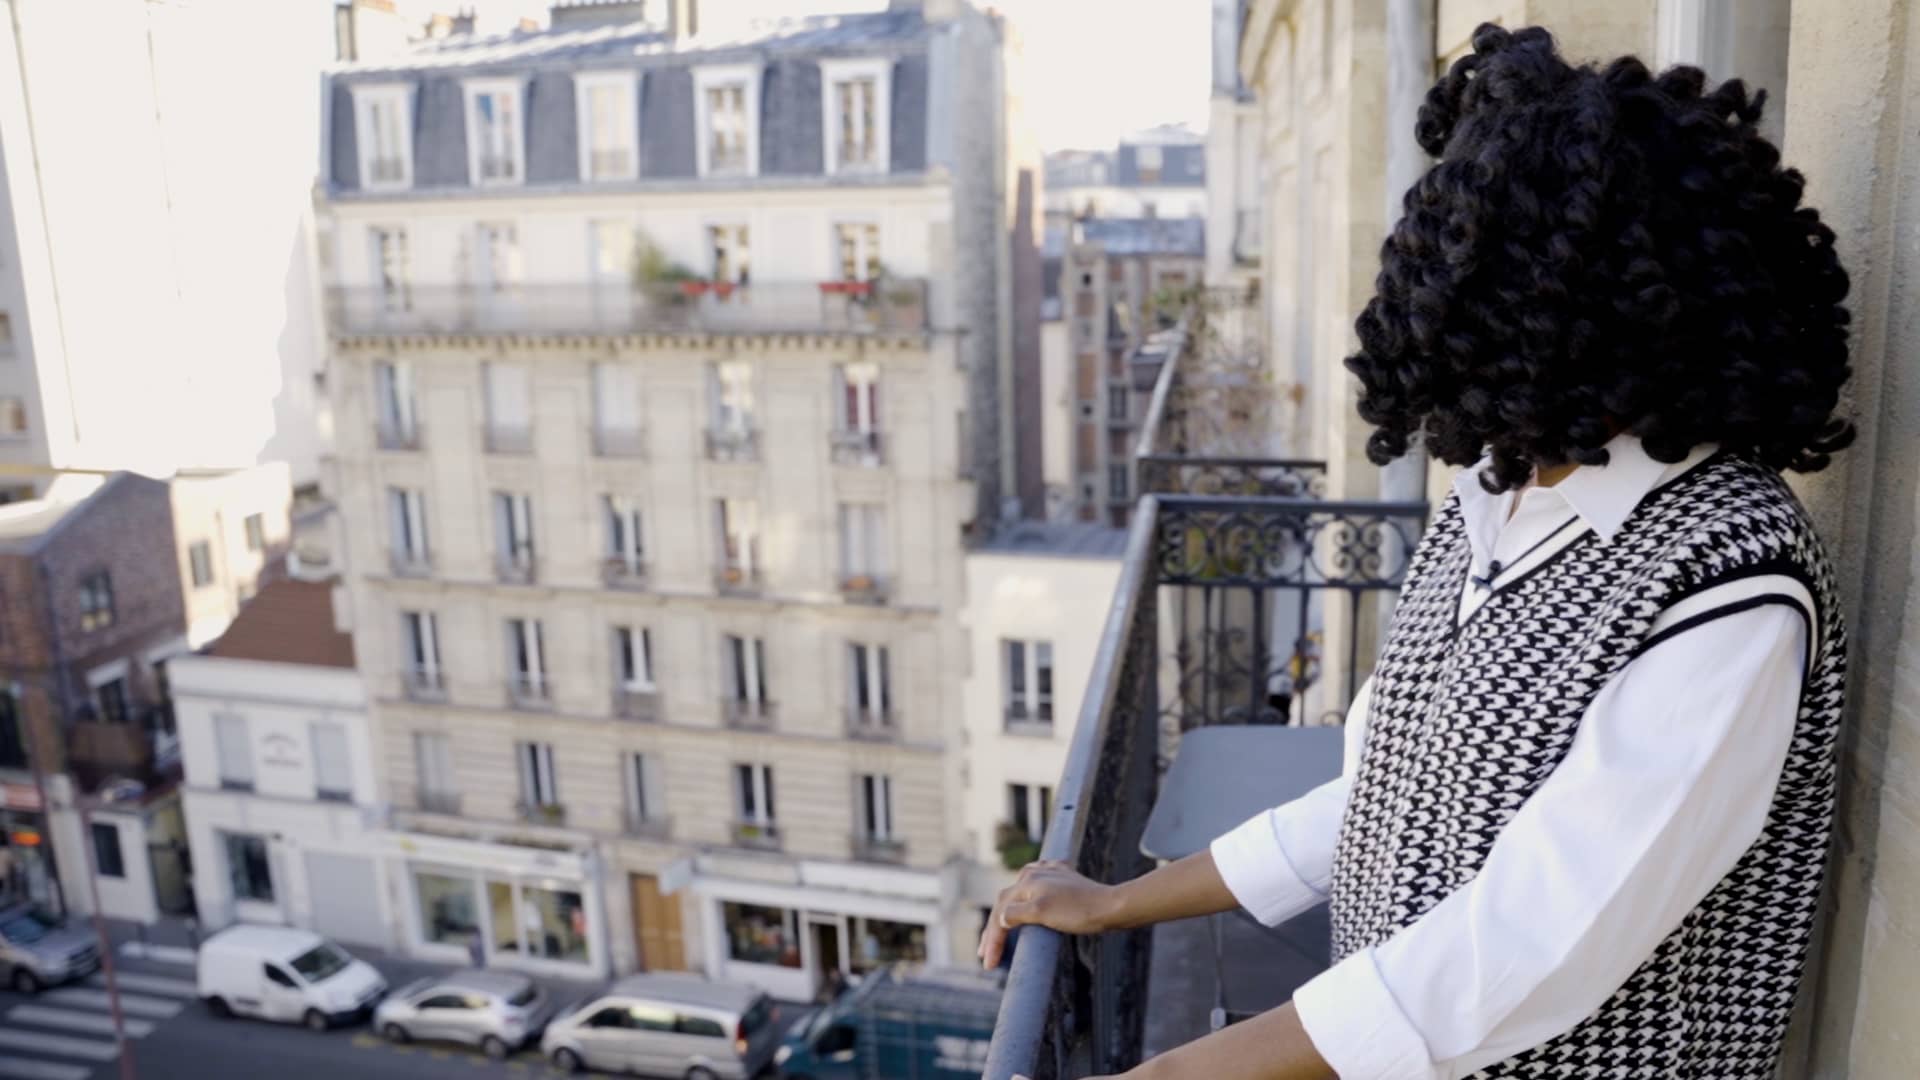 Digital consultant and YouTuber Tiffanie Davis overlooks Paris' Montmartre neighborhood from her apartment.